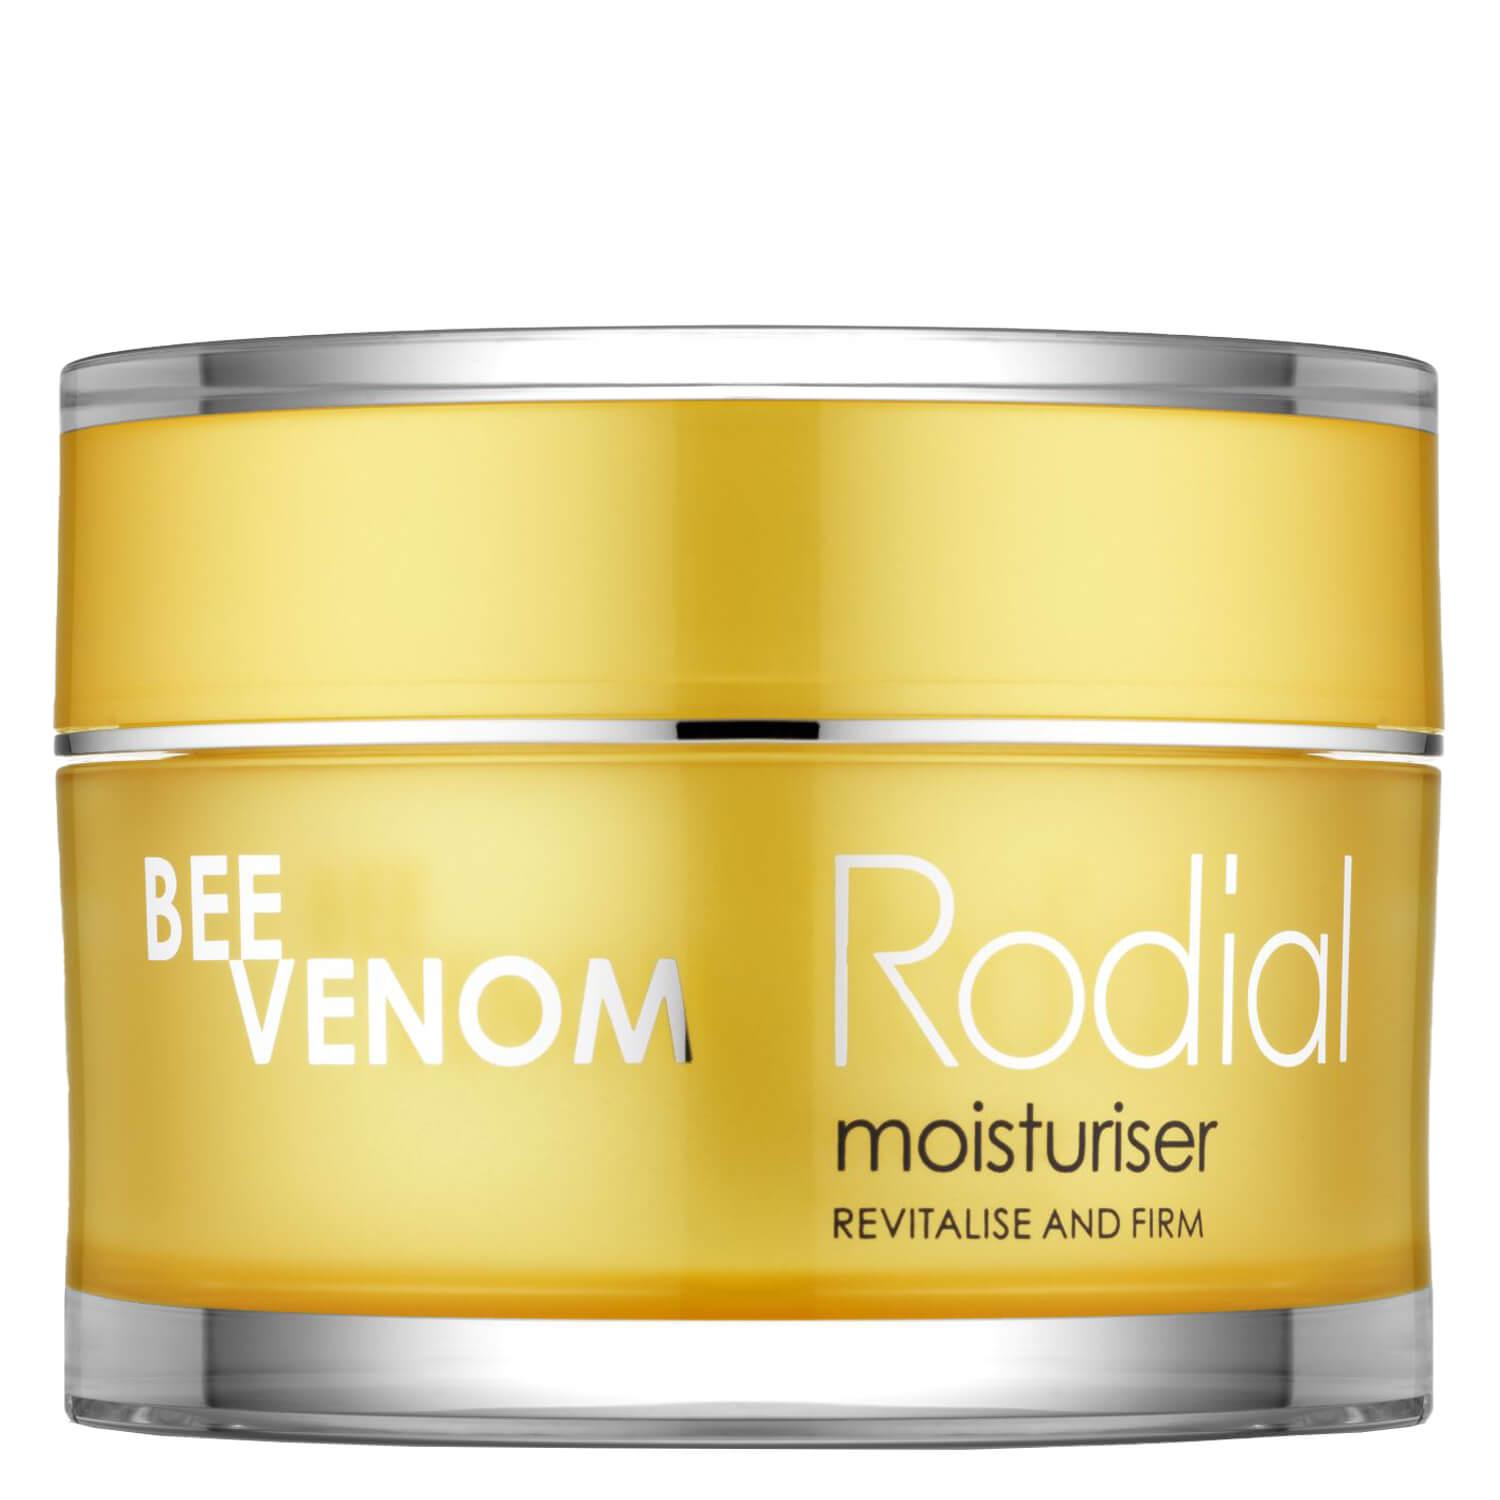 Rodial - Bee Venom Moisturiser